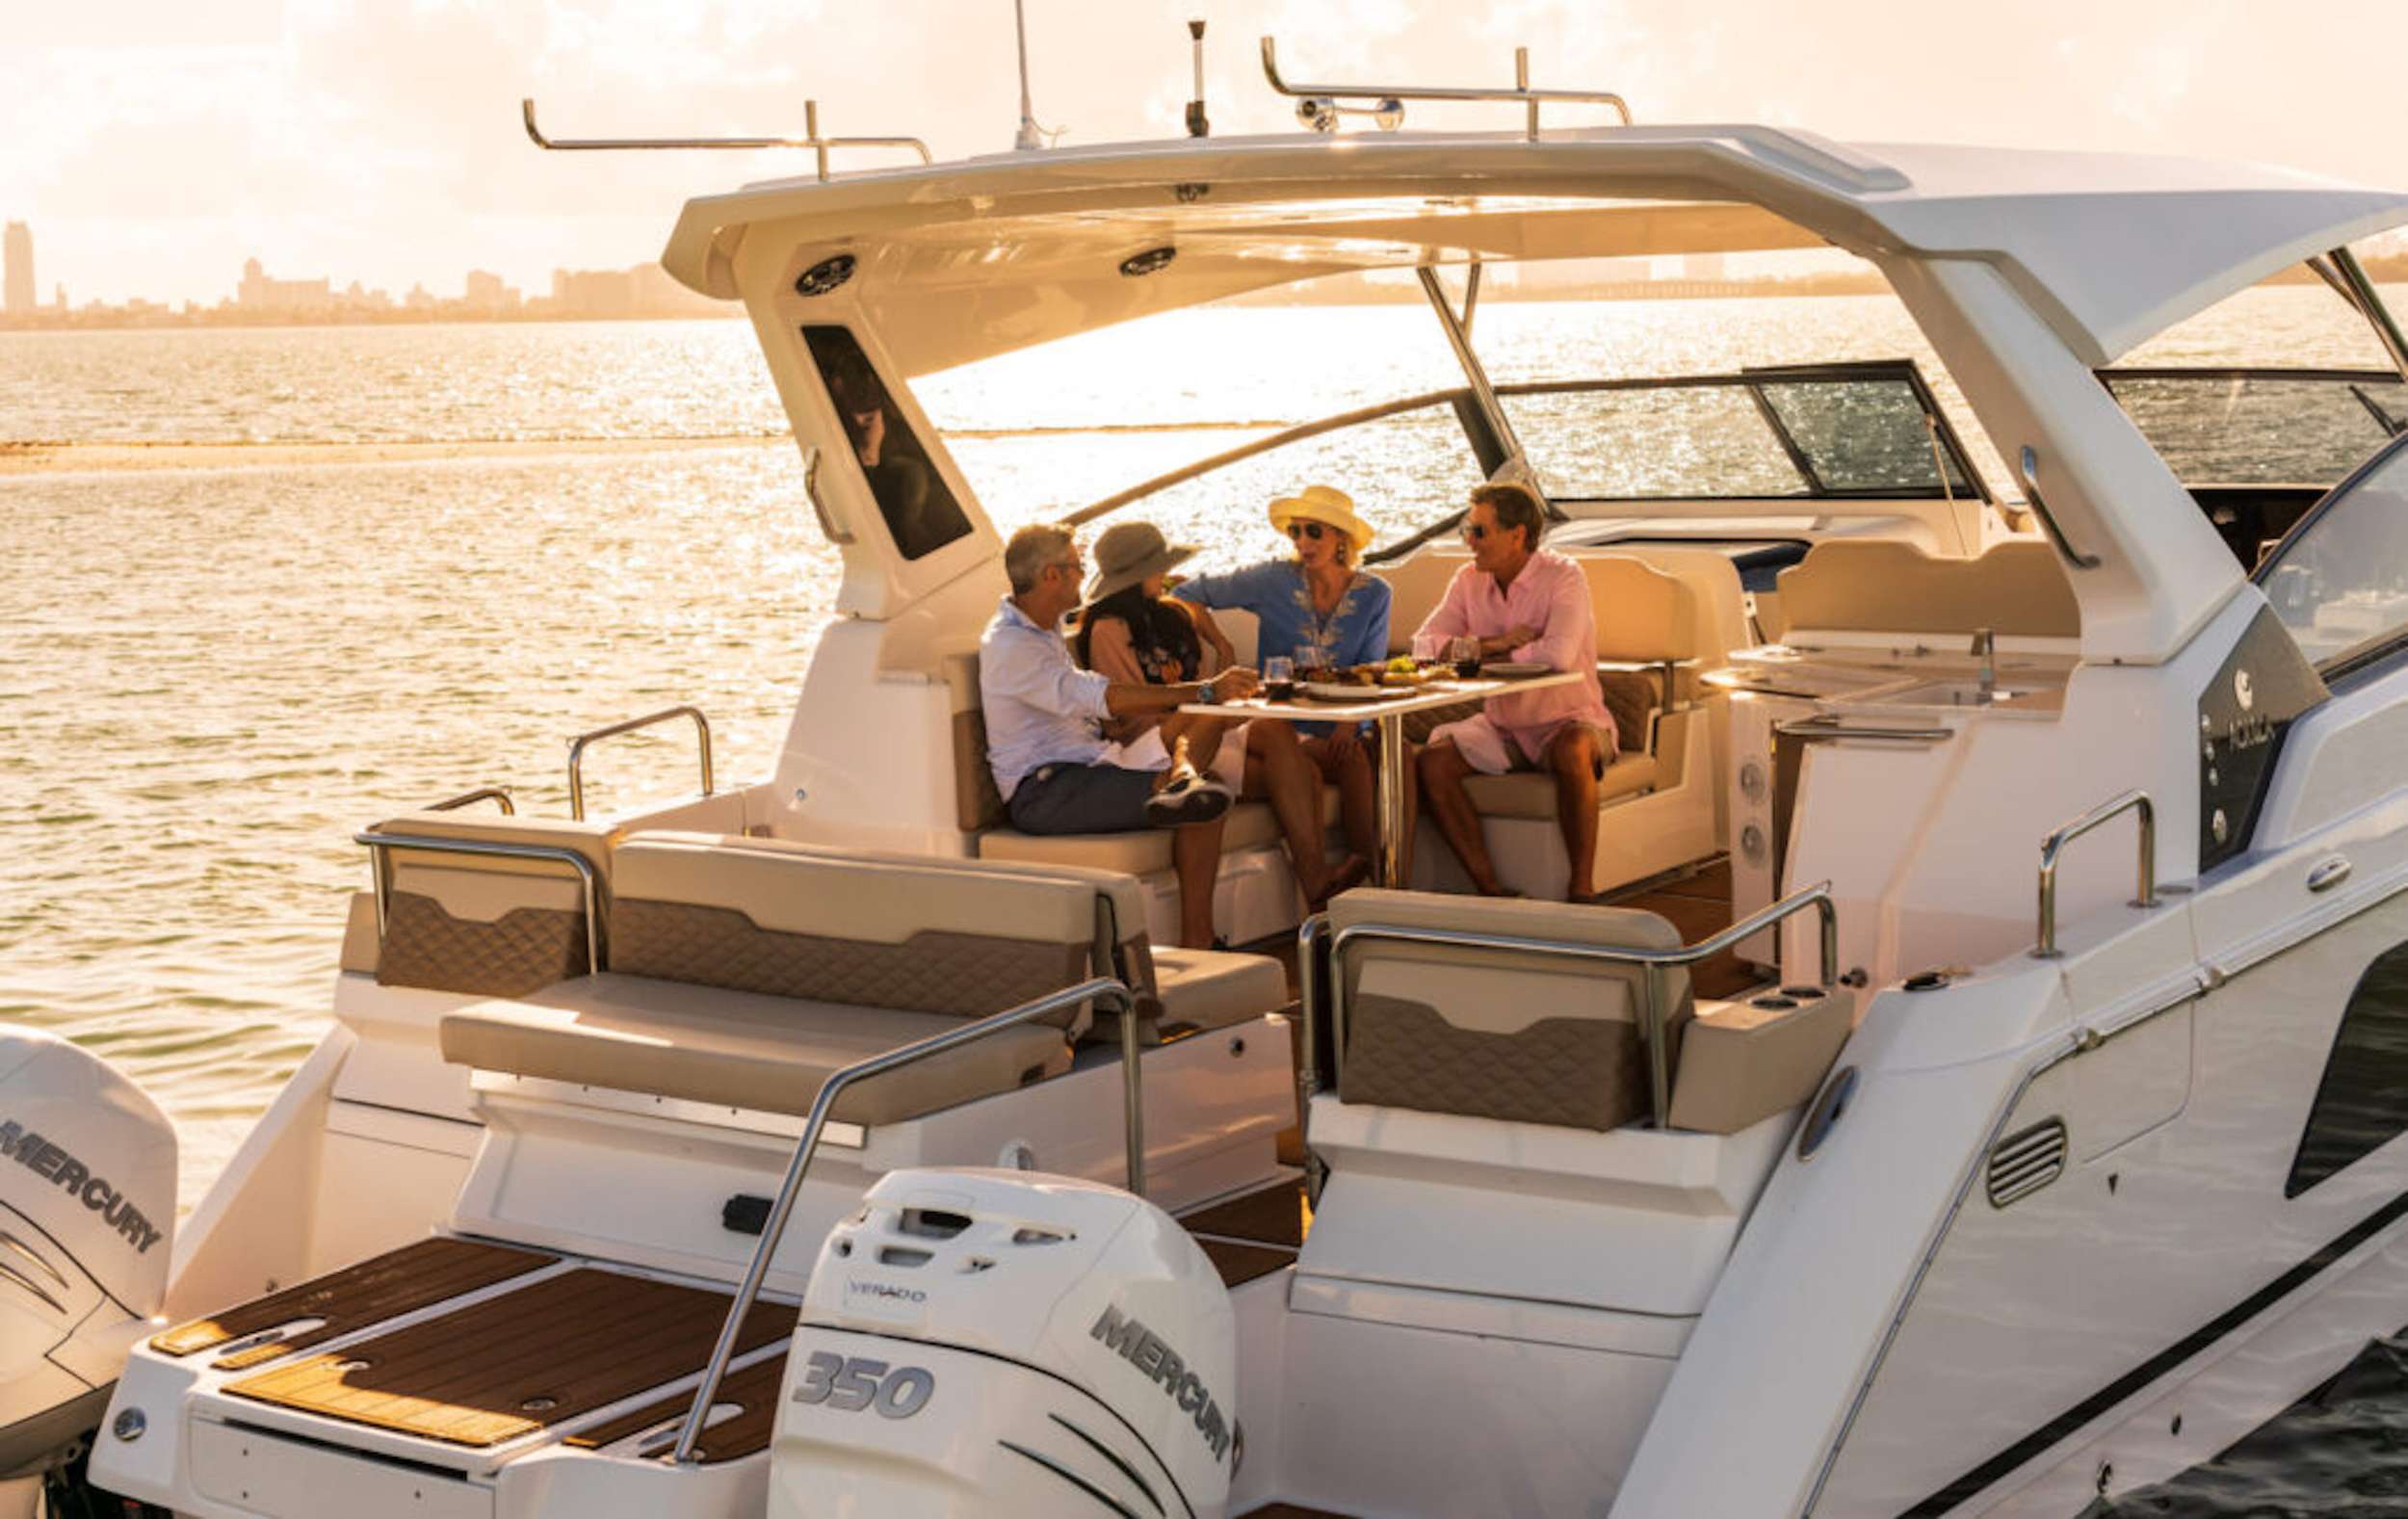 Joy - Luxury yacht charter France & Boat hire in Fr. Riviera, Corsica & Sardinia 2